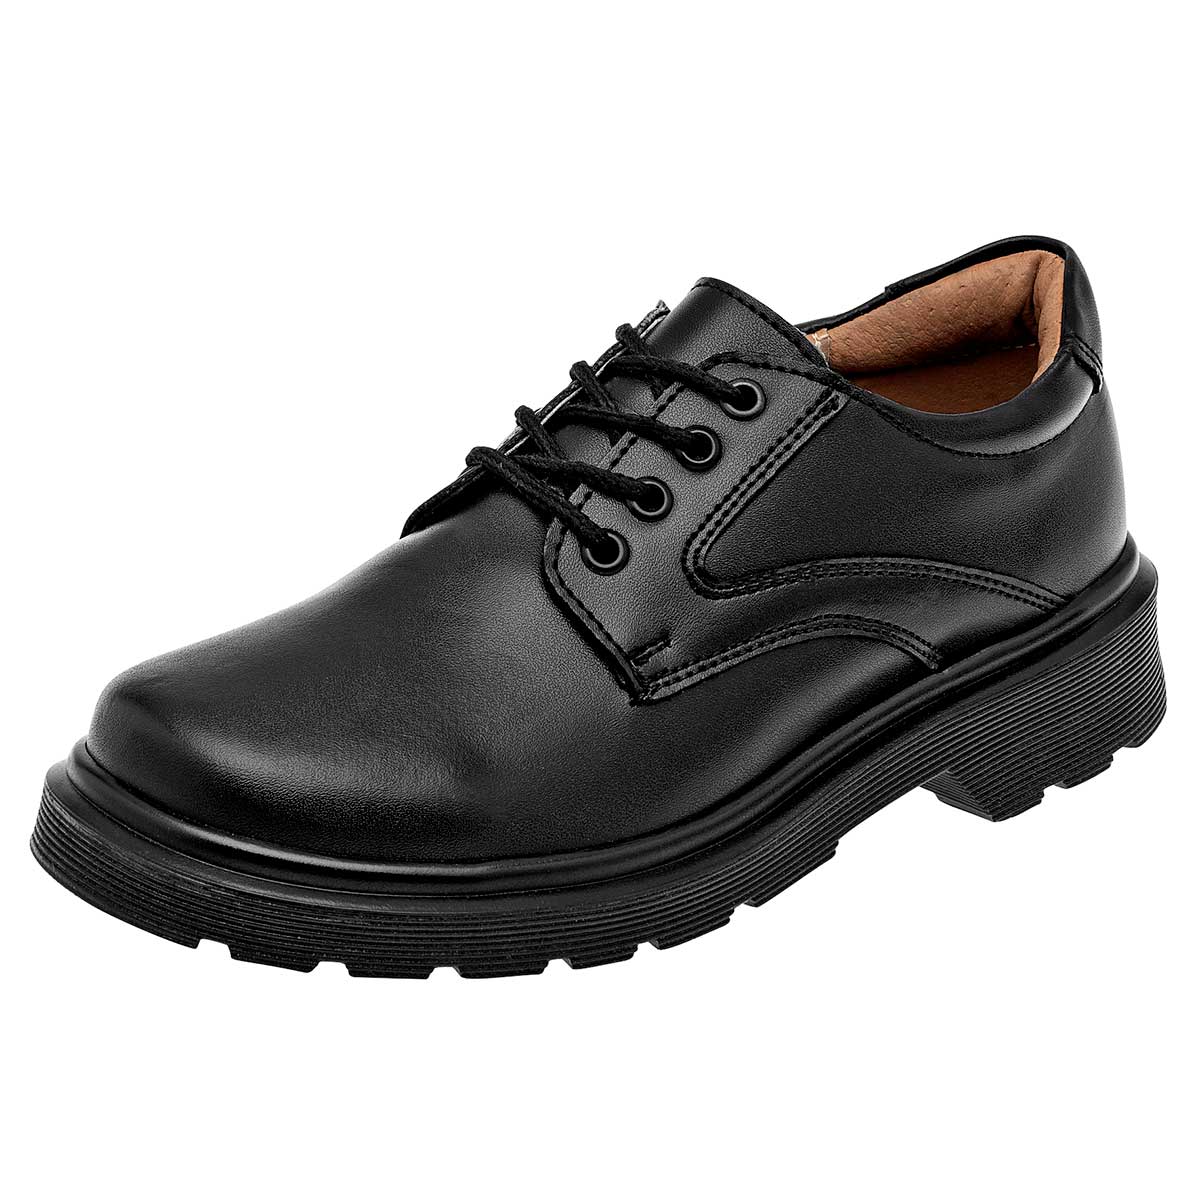 Pakar.com - Mayo: Regalos para mamá | Zapato casual para niño cod-111302